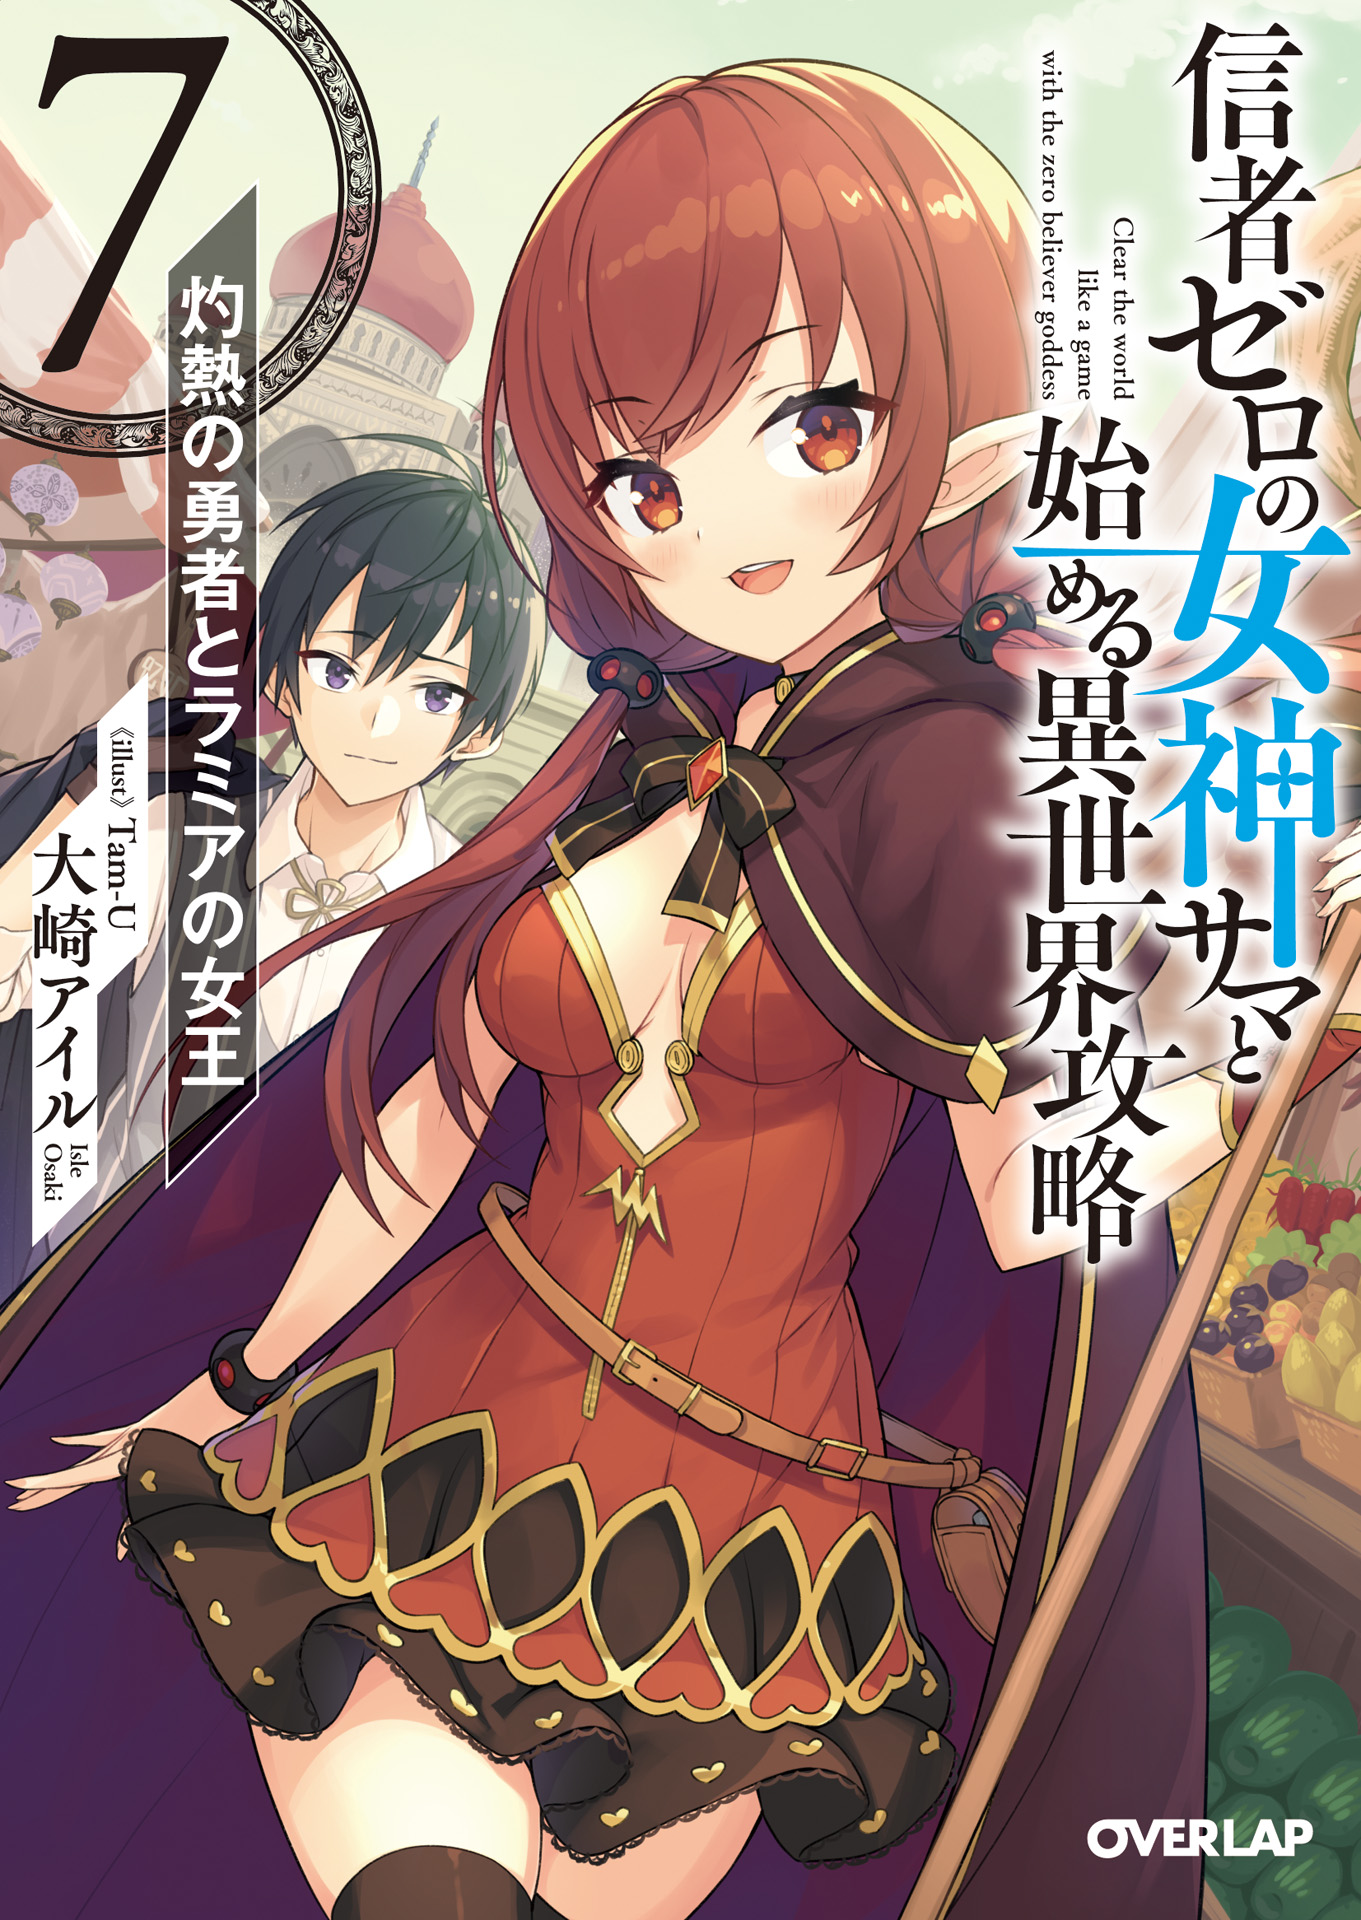 Manga Mogura RE on X: The Kenja Light Novel saga by Shinkou